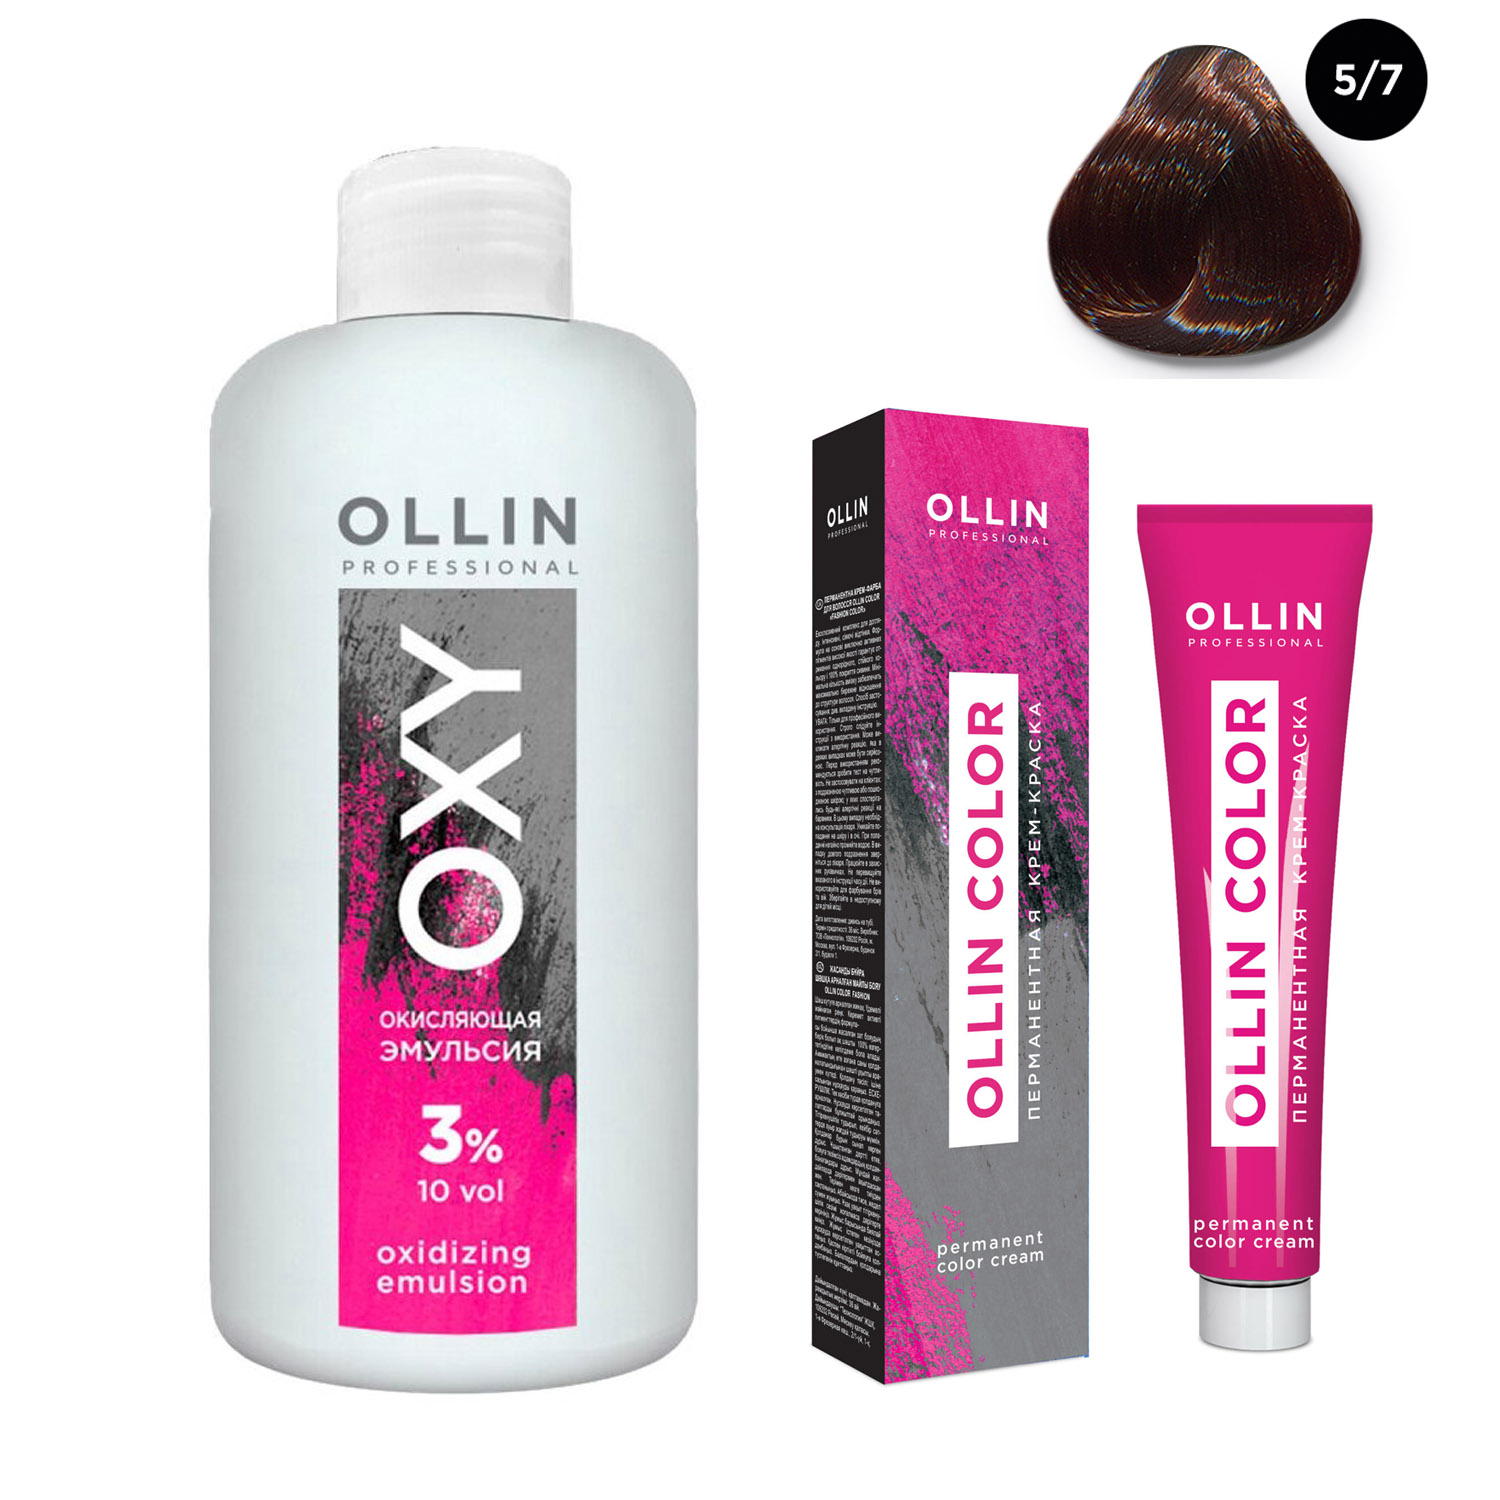 Ollin Professional Набор Перманентная крем-краска для волос Ollin Color оттенок 5/7 светлый шатен коричневый 100 мл + Окисляющая эмульсия Oxy 3% 150 мл (Ollin Professional, Ollin Color)